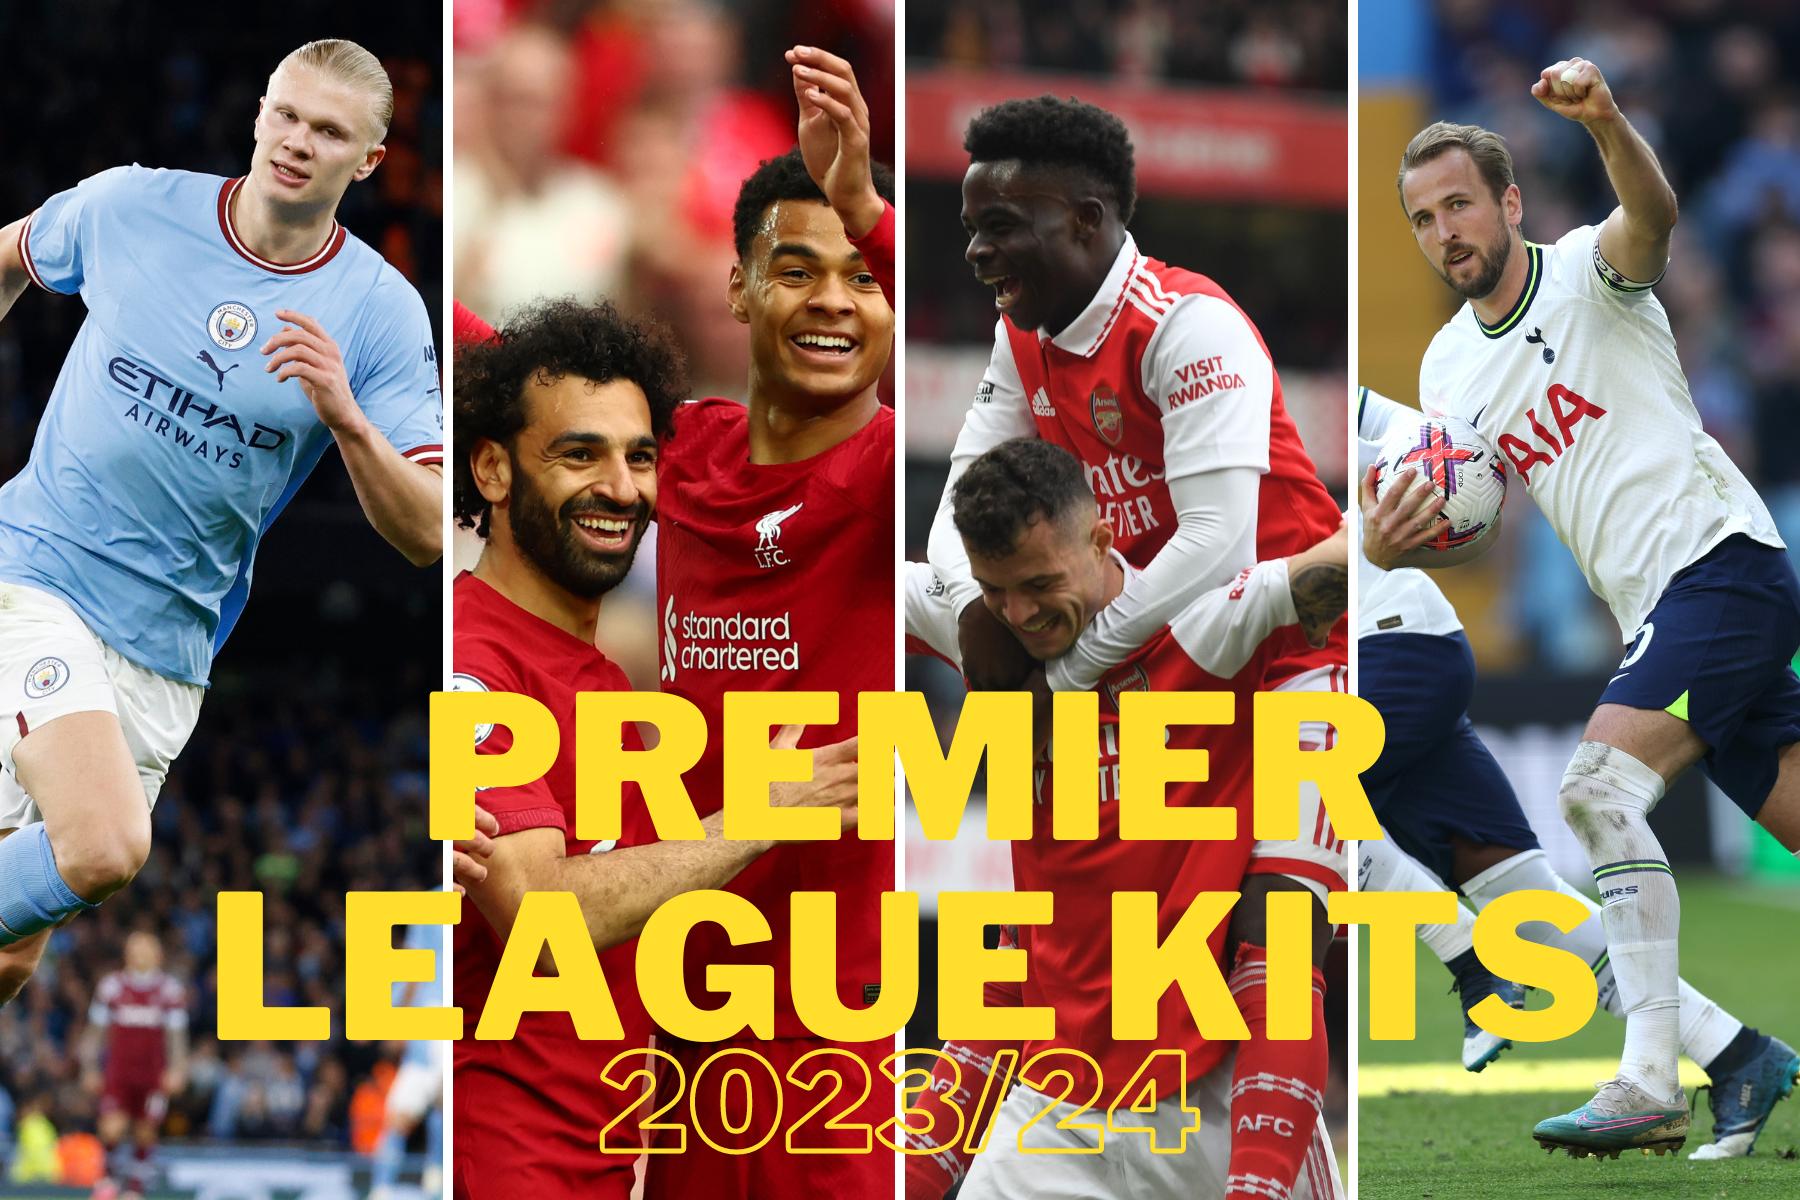 Premier League kits for 2023/24 season: Every club's new jerseys